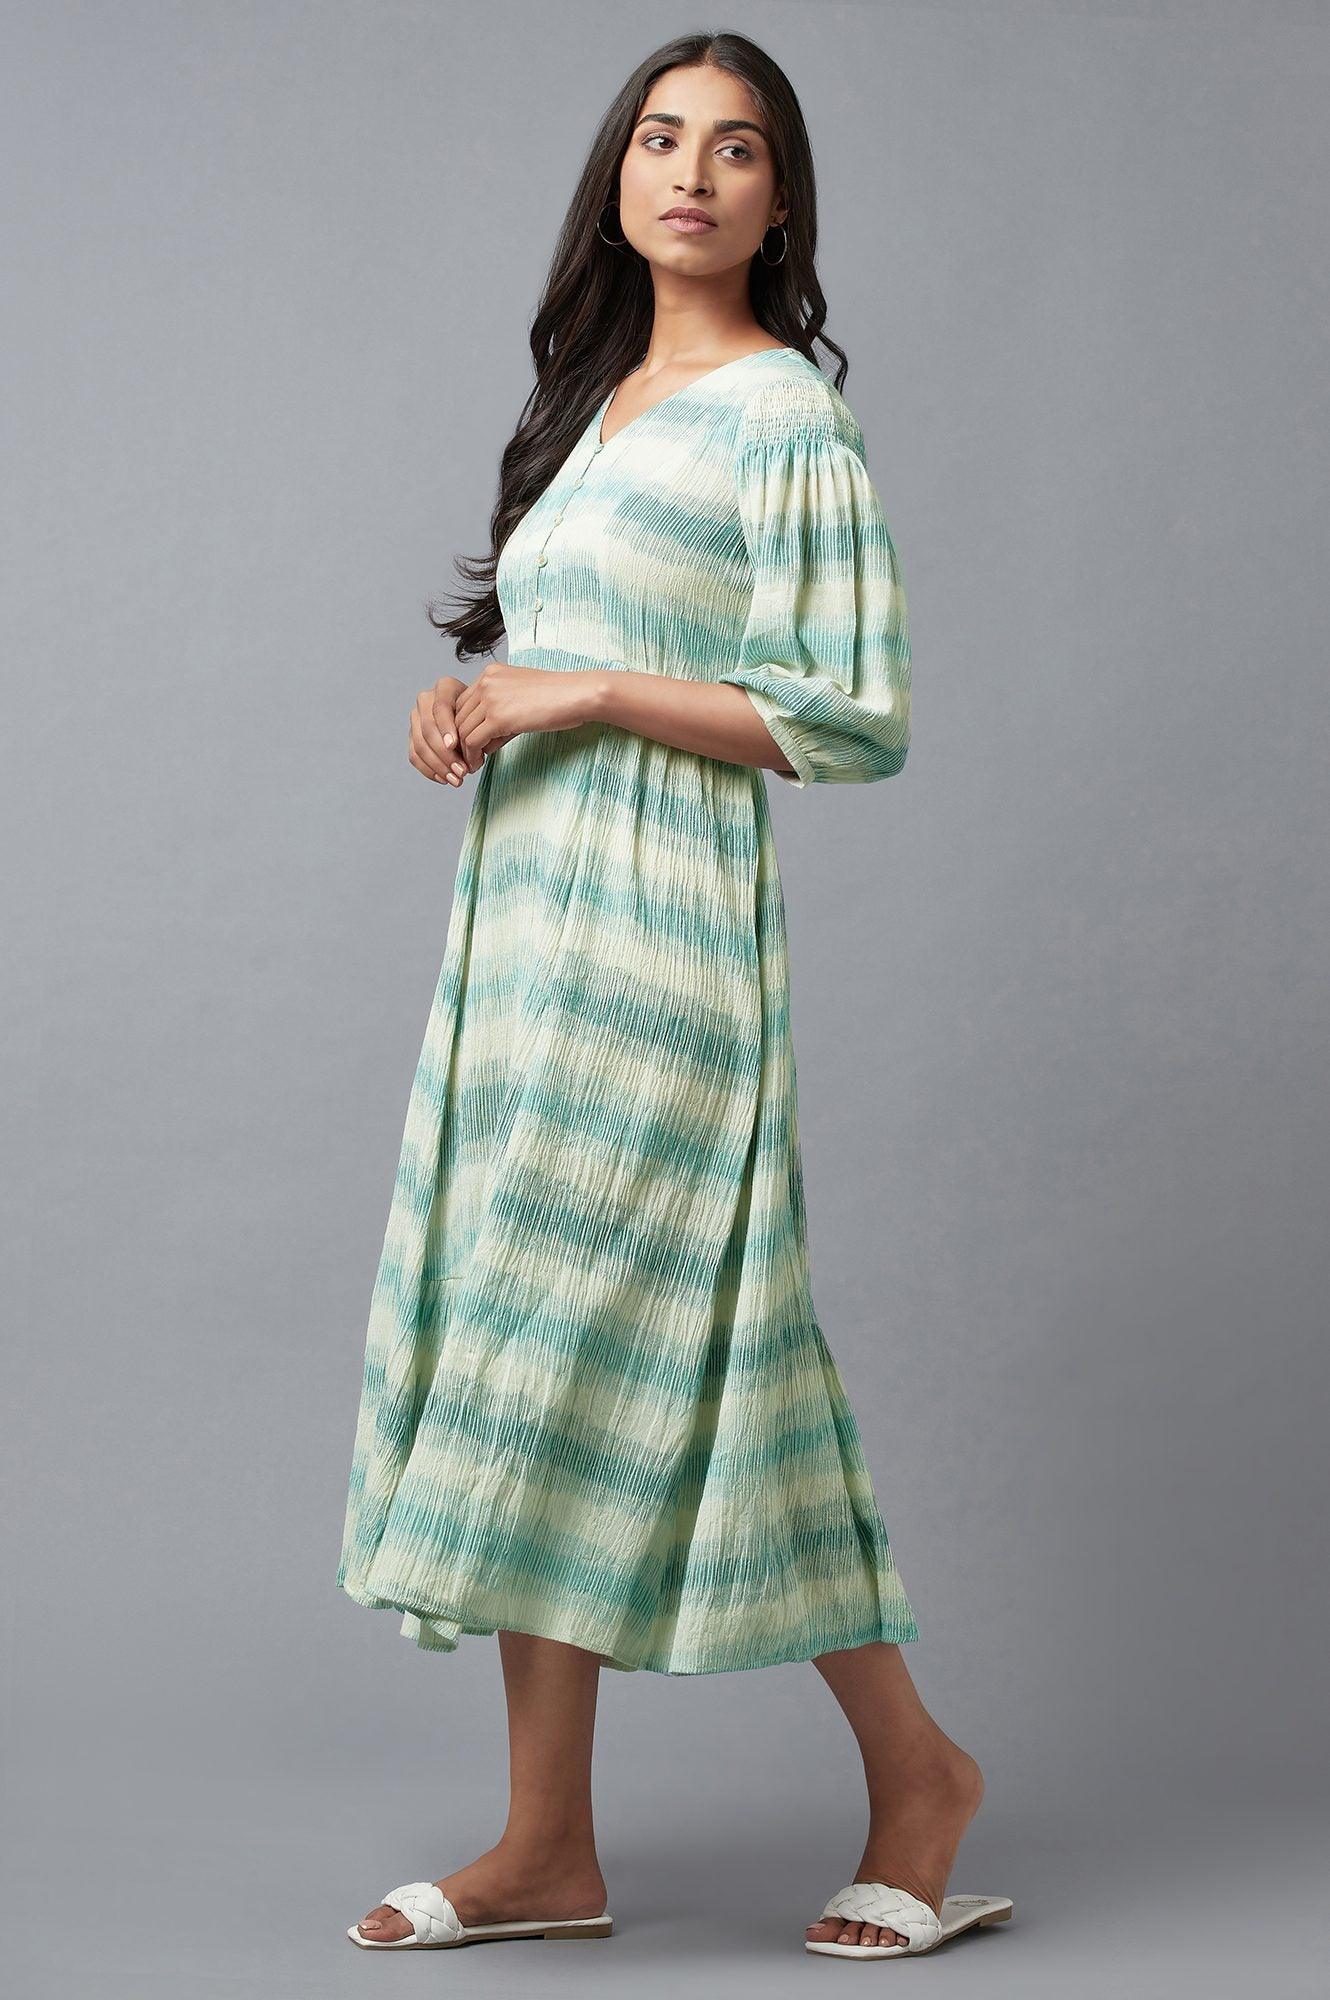 Ecru Gathered Ikat Print Dress In V-Neck - wforwoman